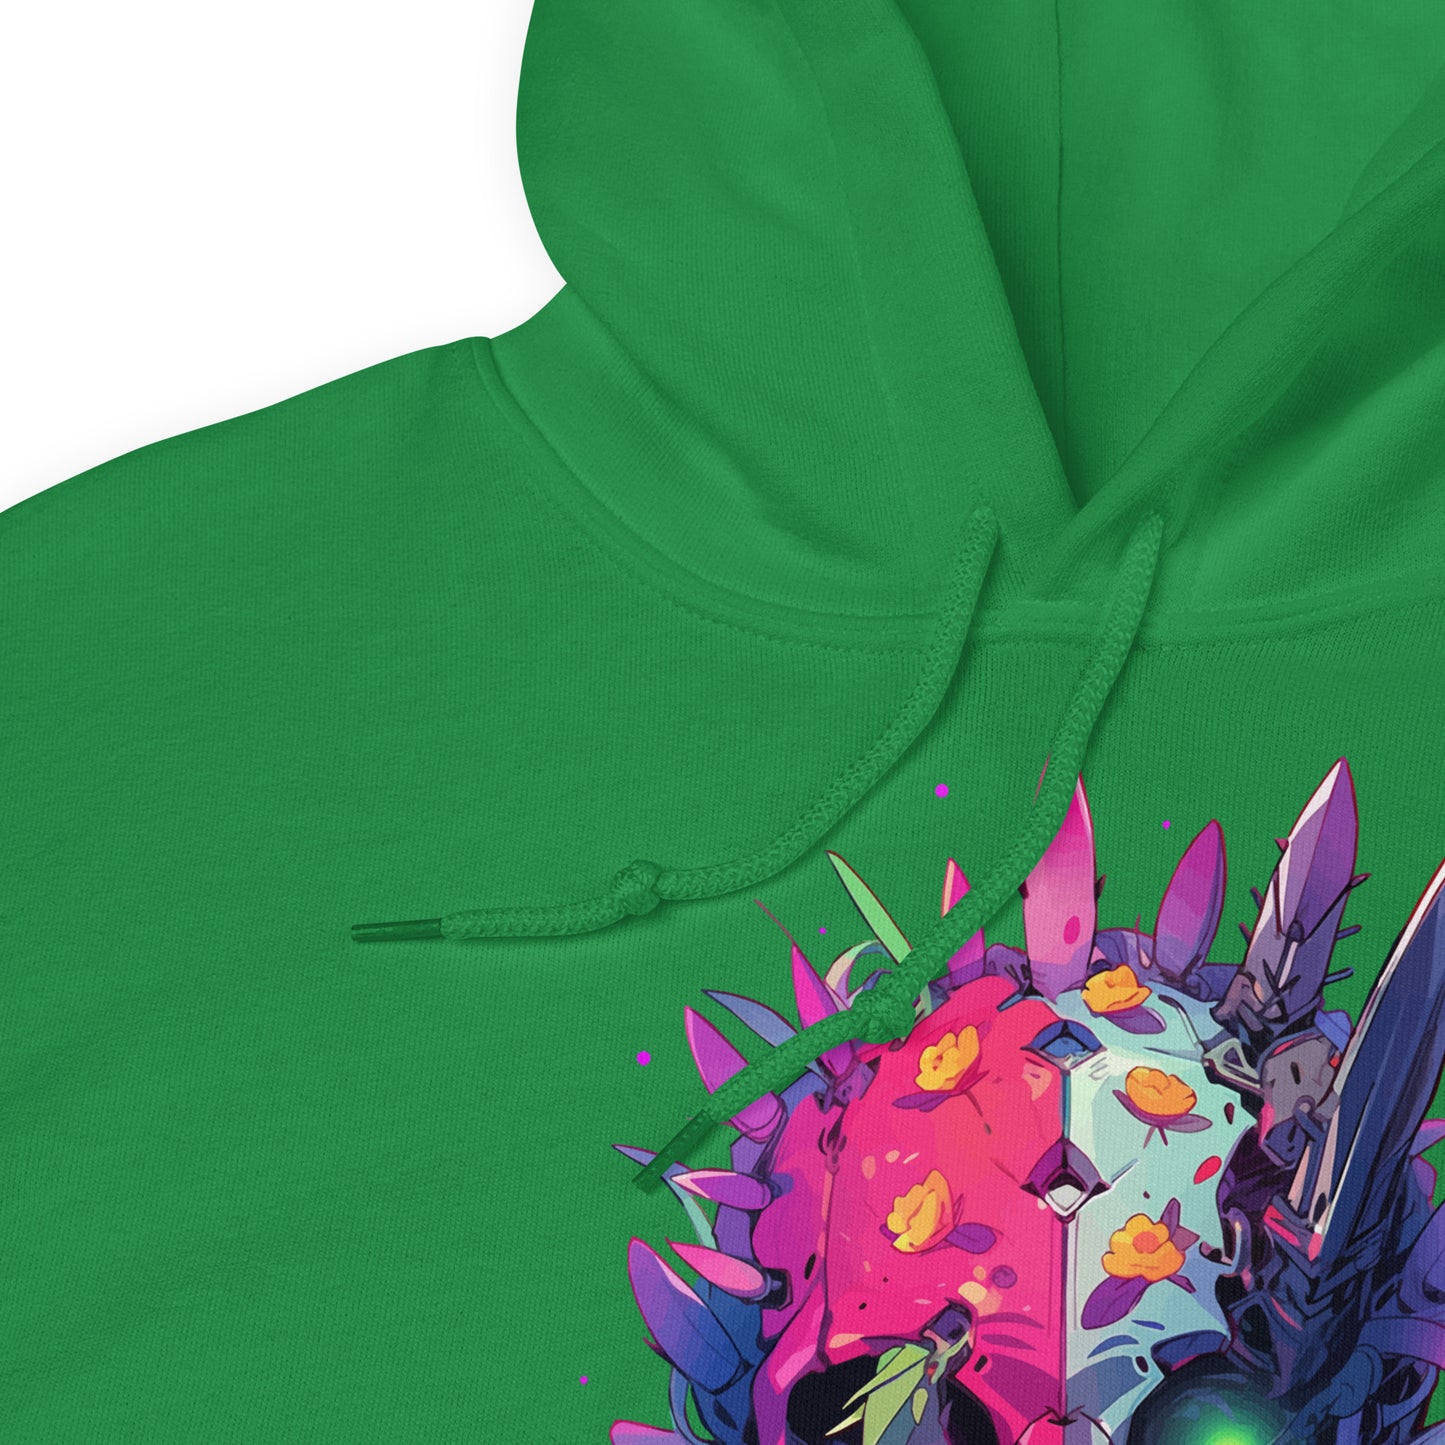 Fantastic head, Cactus skull smiling, Mutant with green eye, Pop Art fantasy monster - Unisex Hoodie